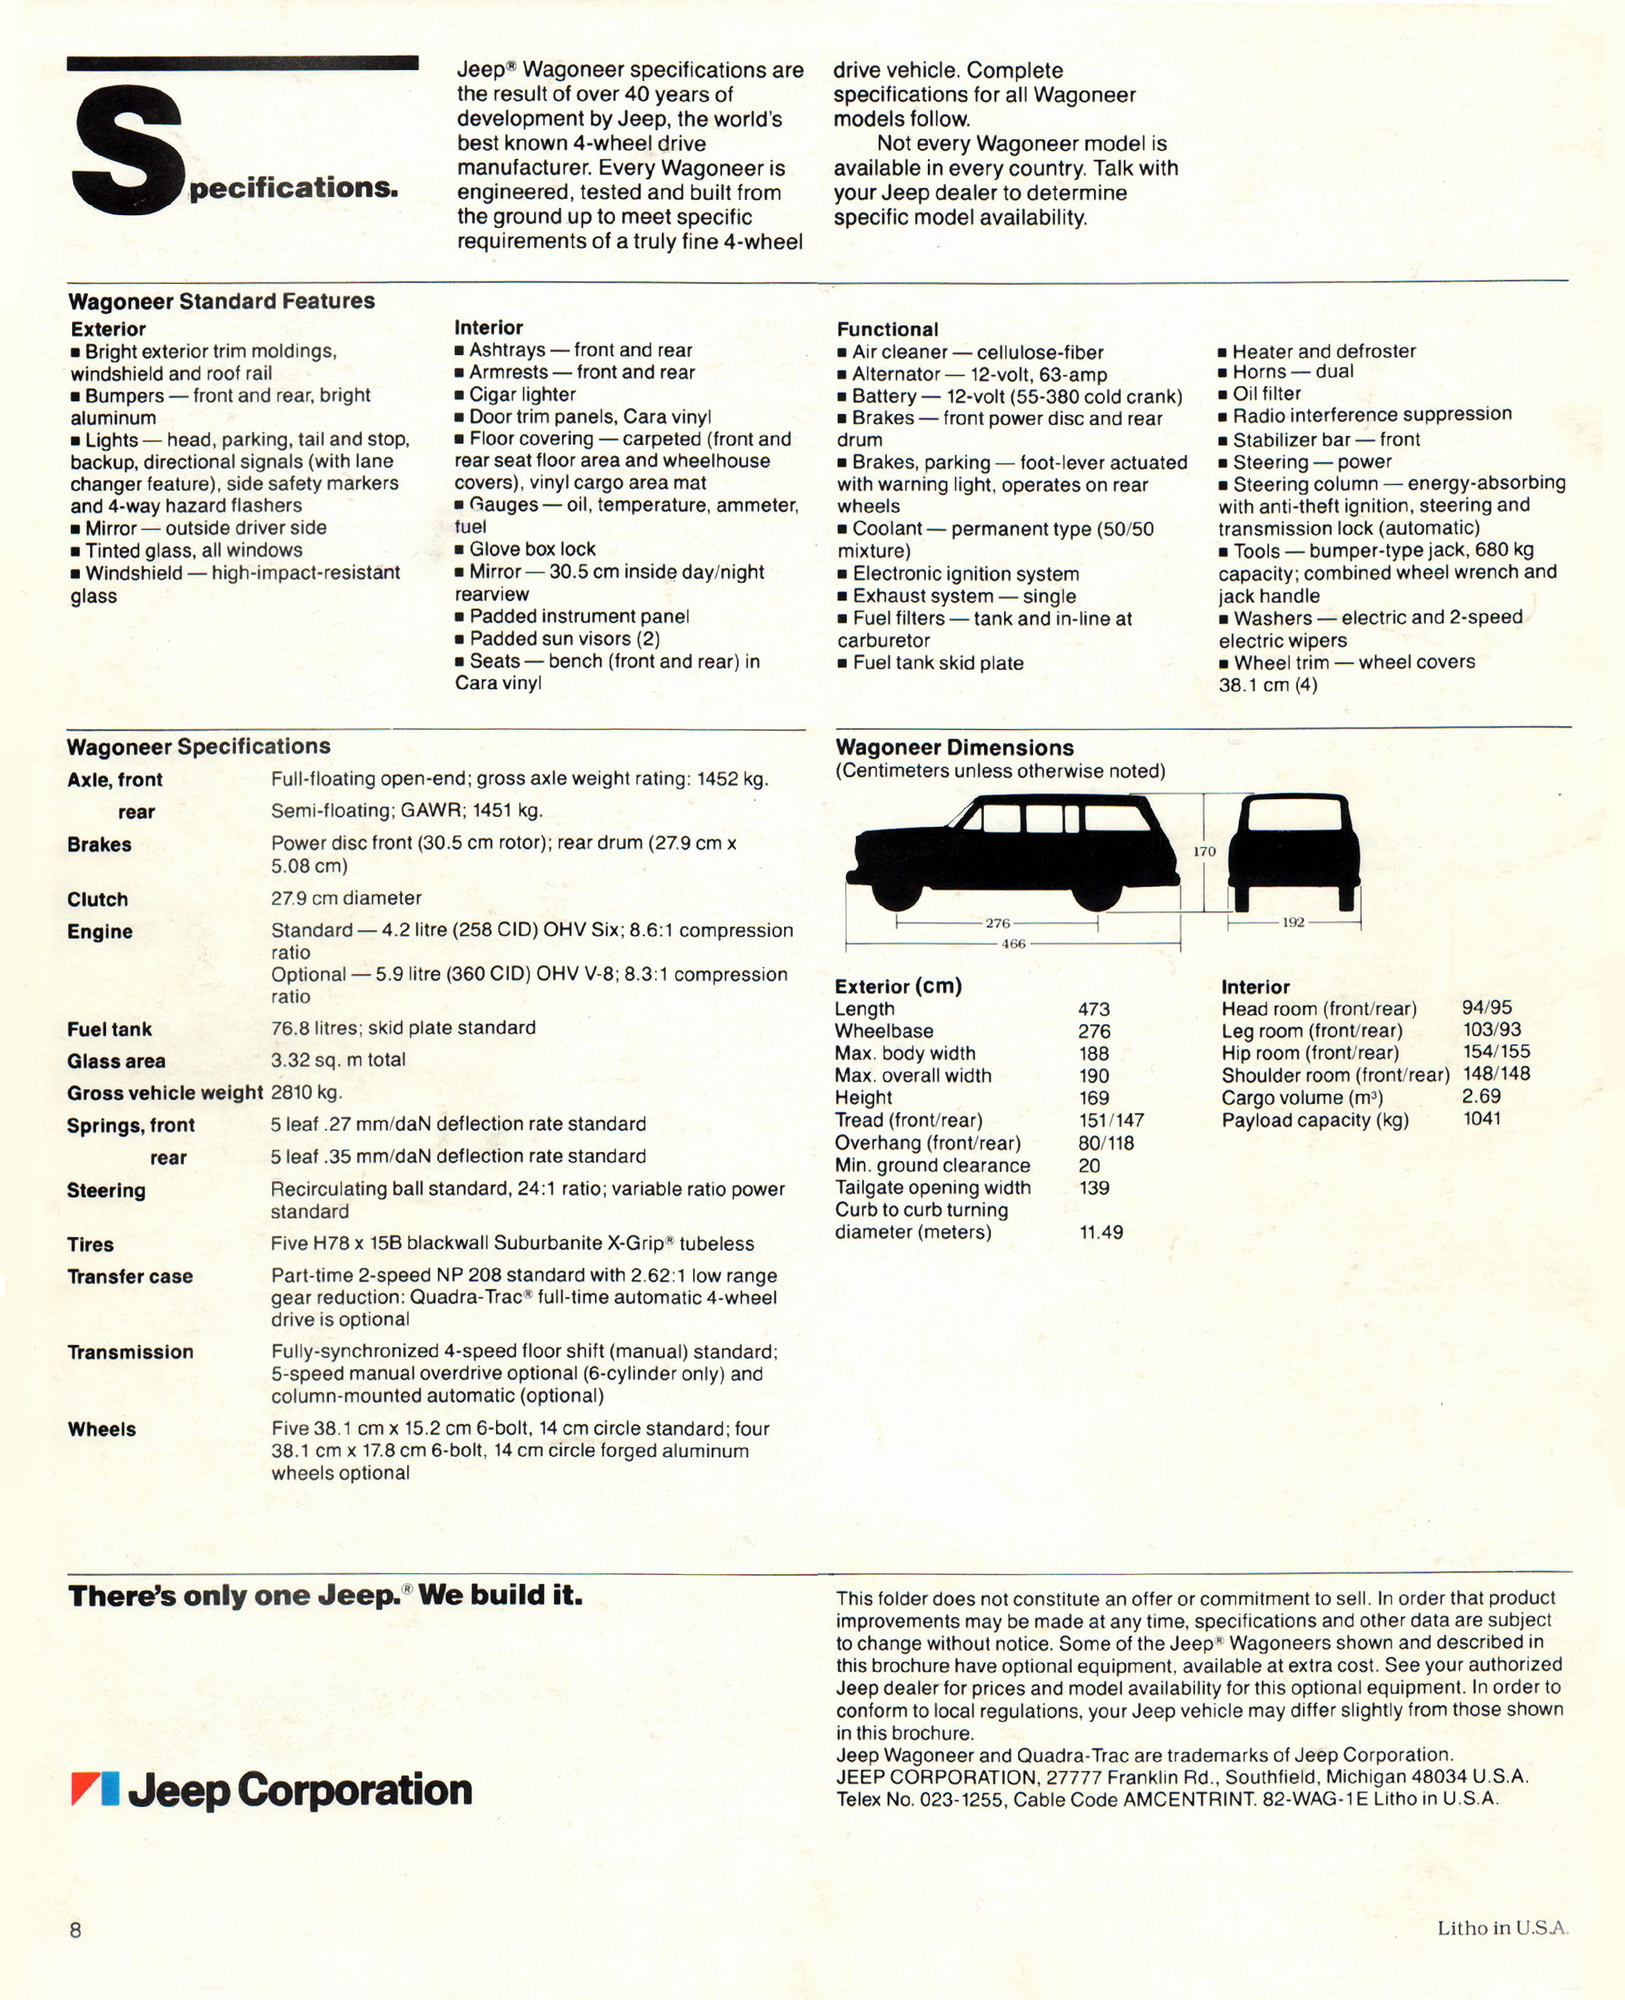 1981 Jeep Wagoneer Brochure Page 5